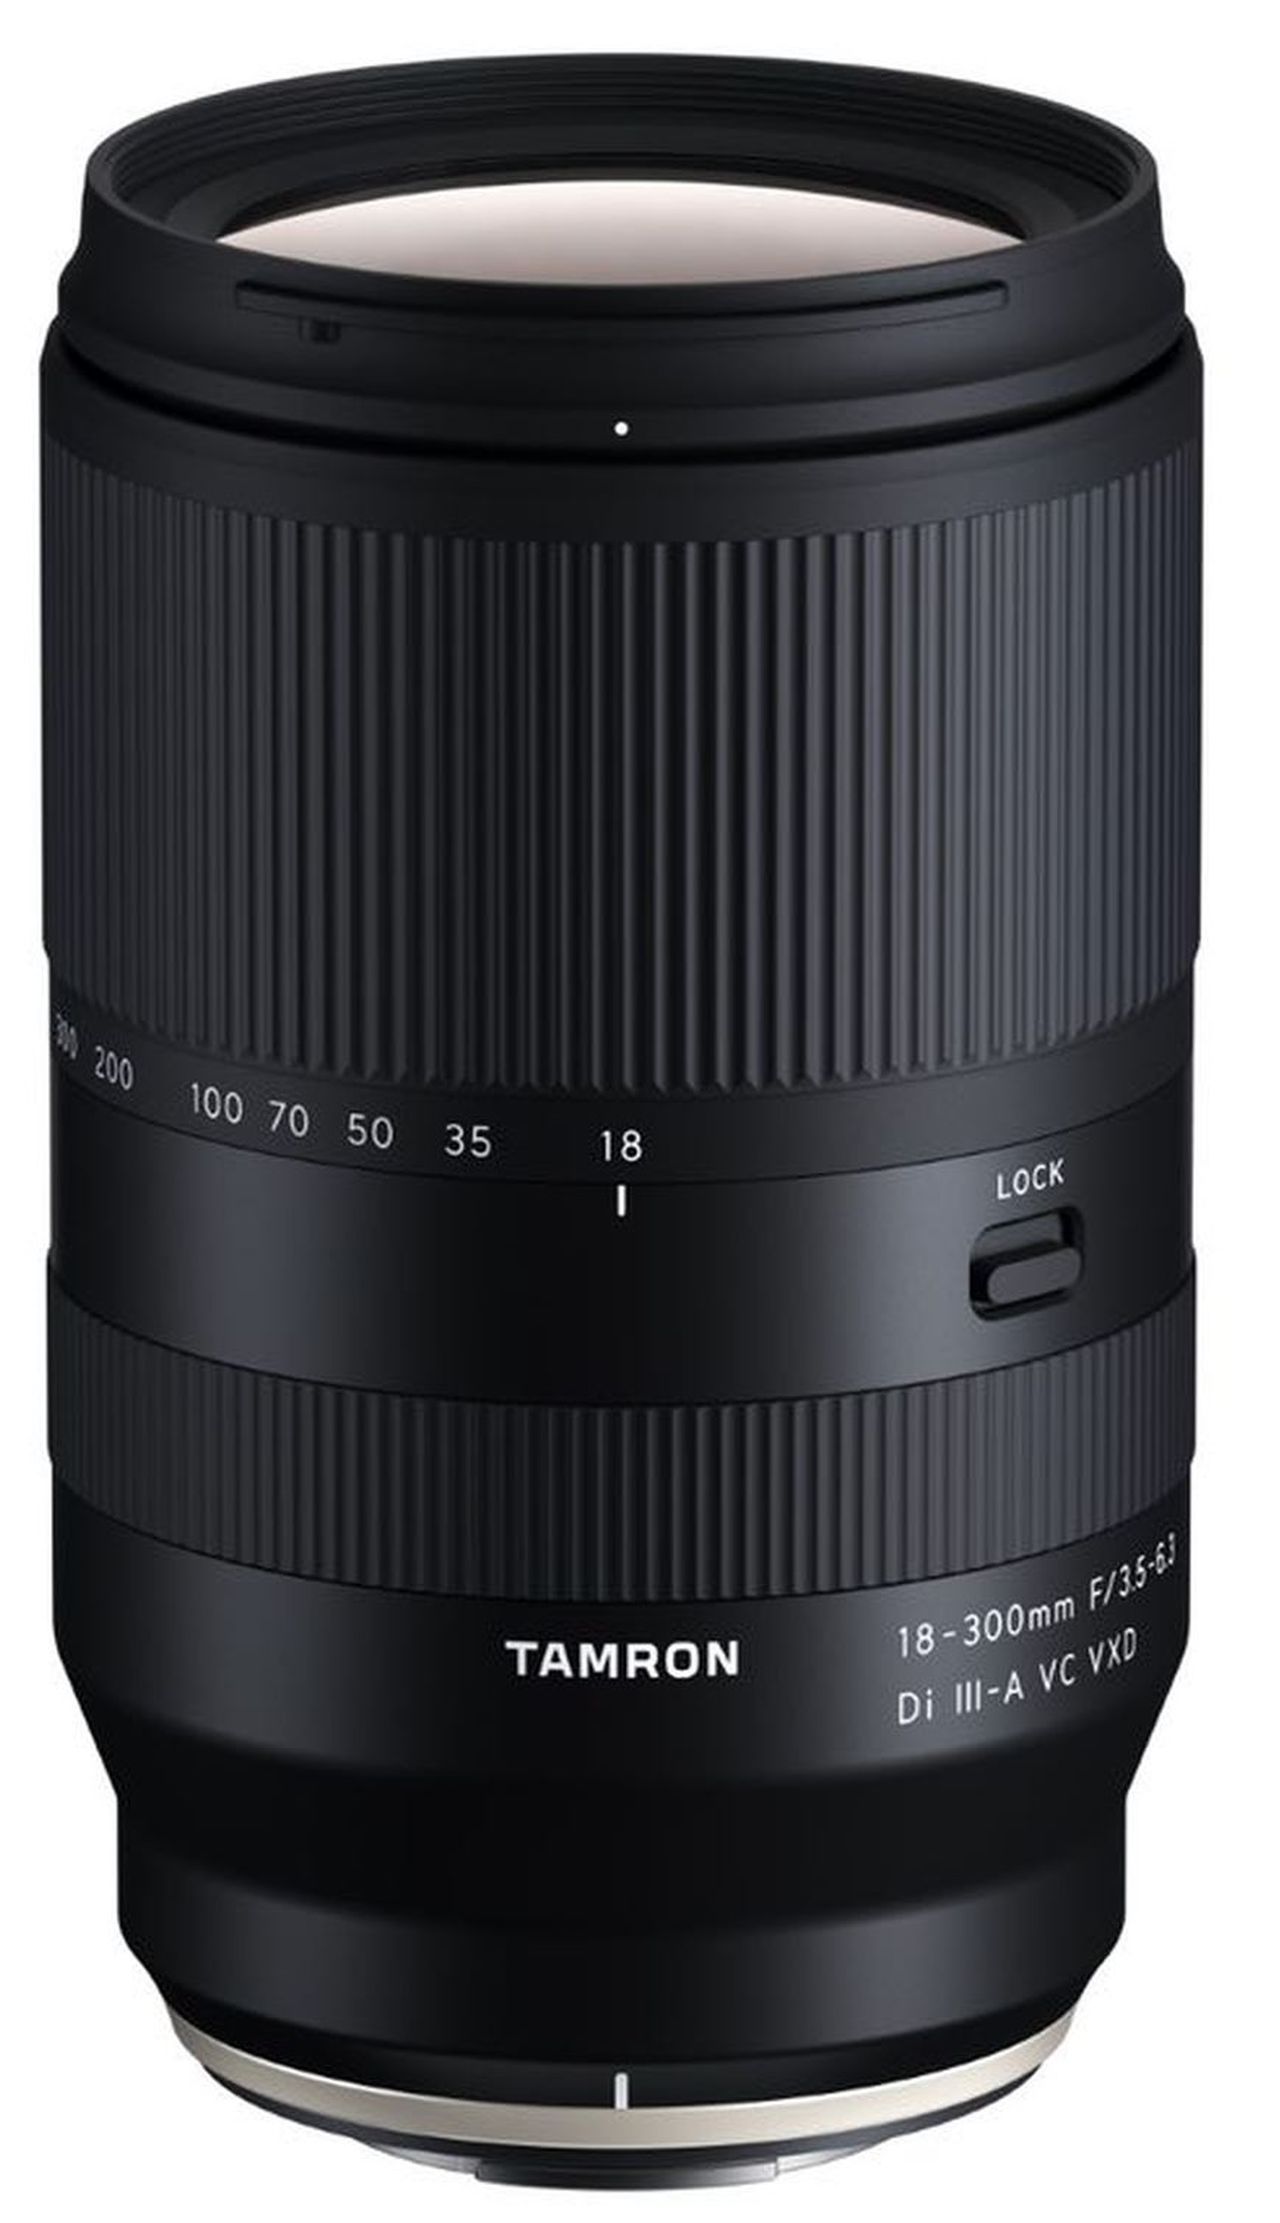 TAMRON 18-300mm F3.5-6.3 Di III-A VC VXD - レンズ(ズーム)